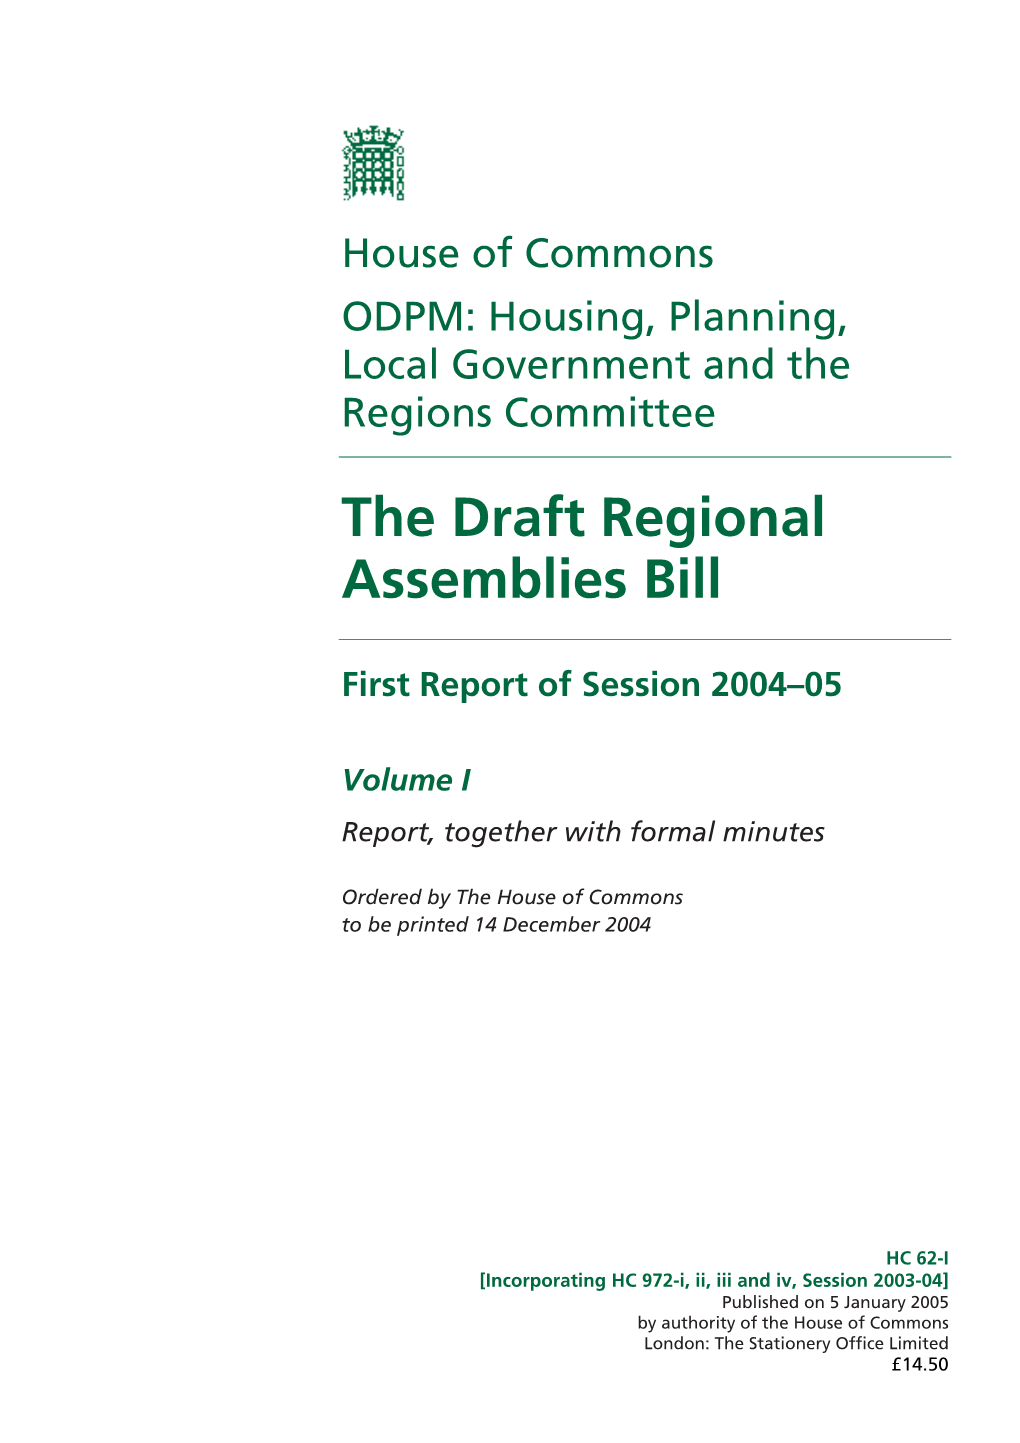 The Draft Regional Assemblies Bill